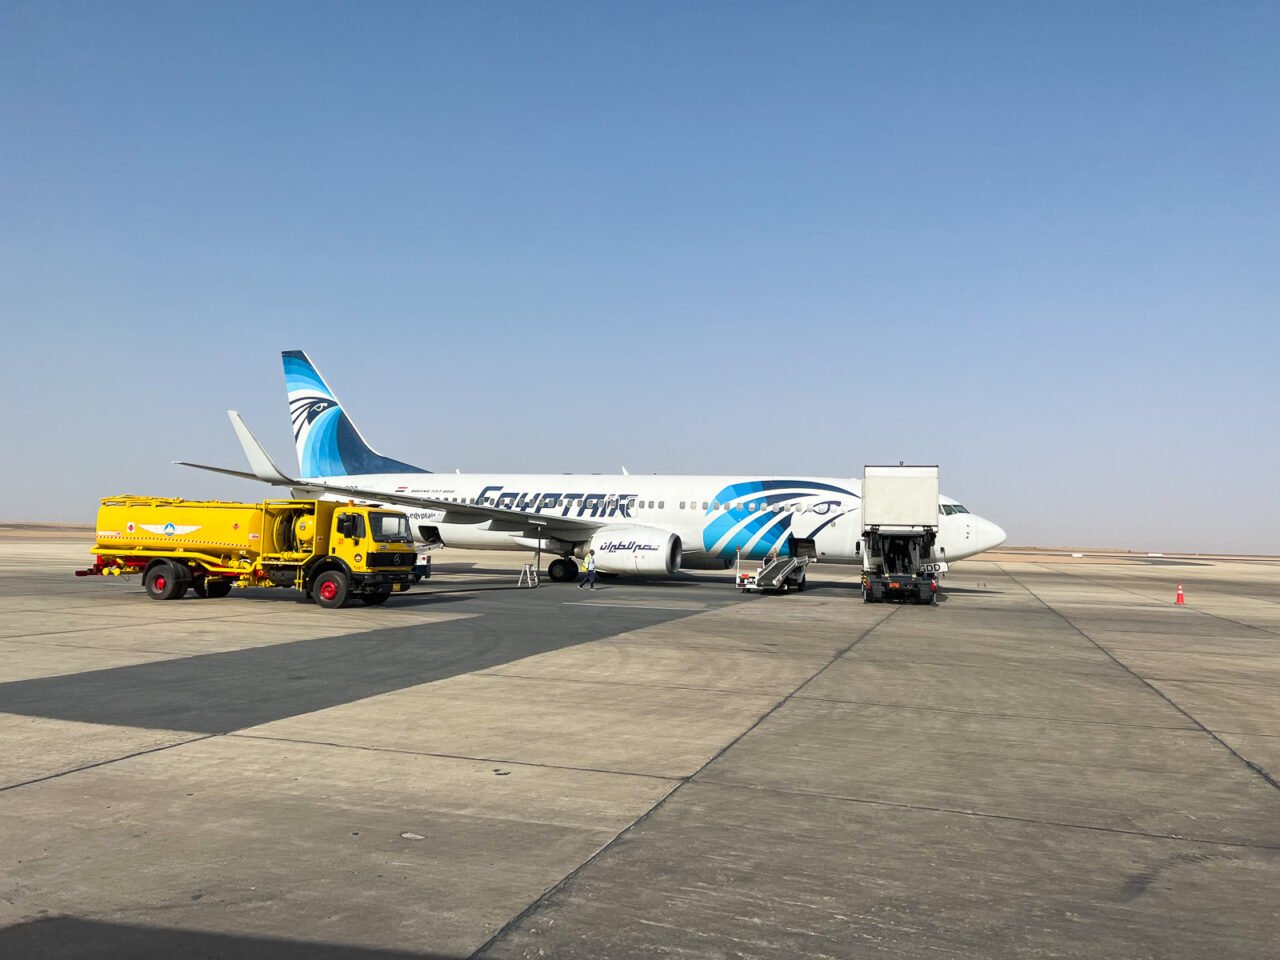 Egyptair plane on tarmac in Aswan